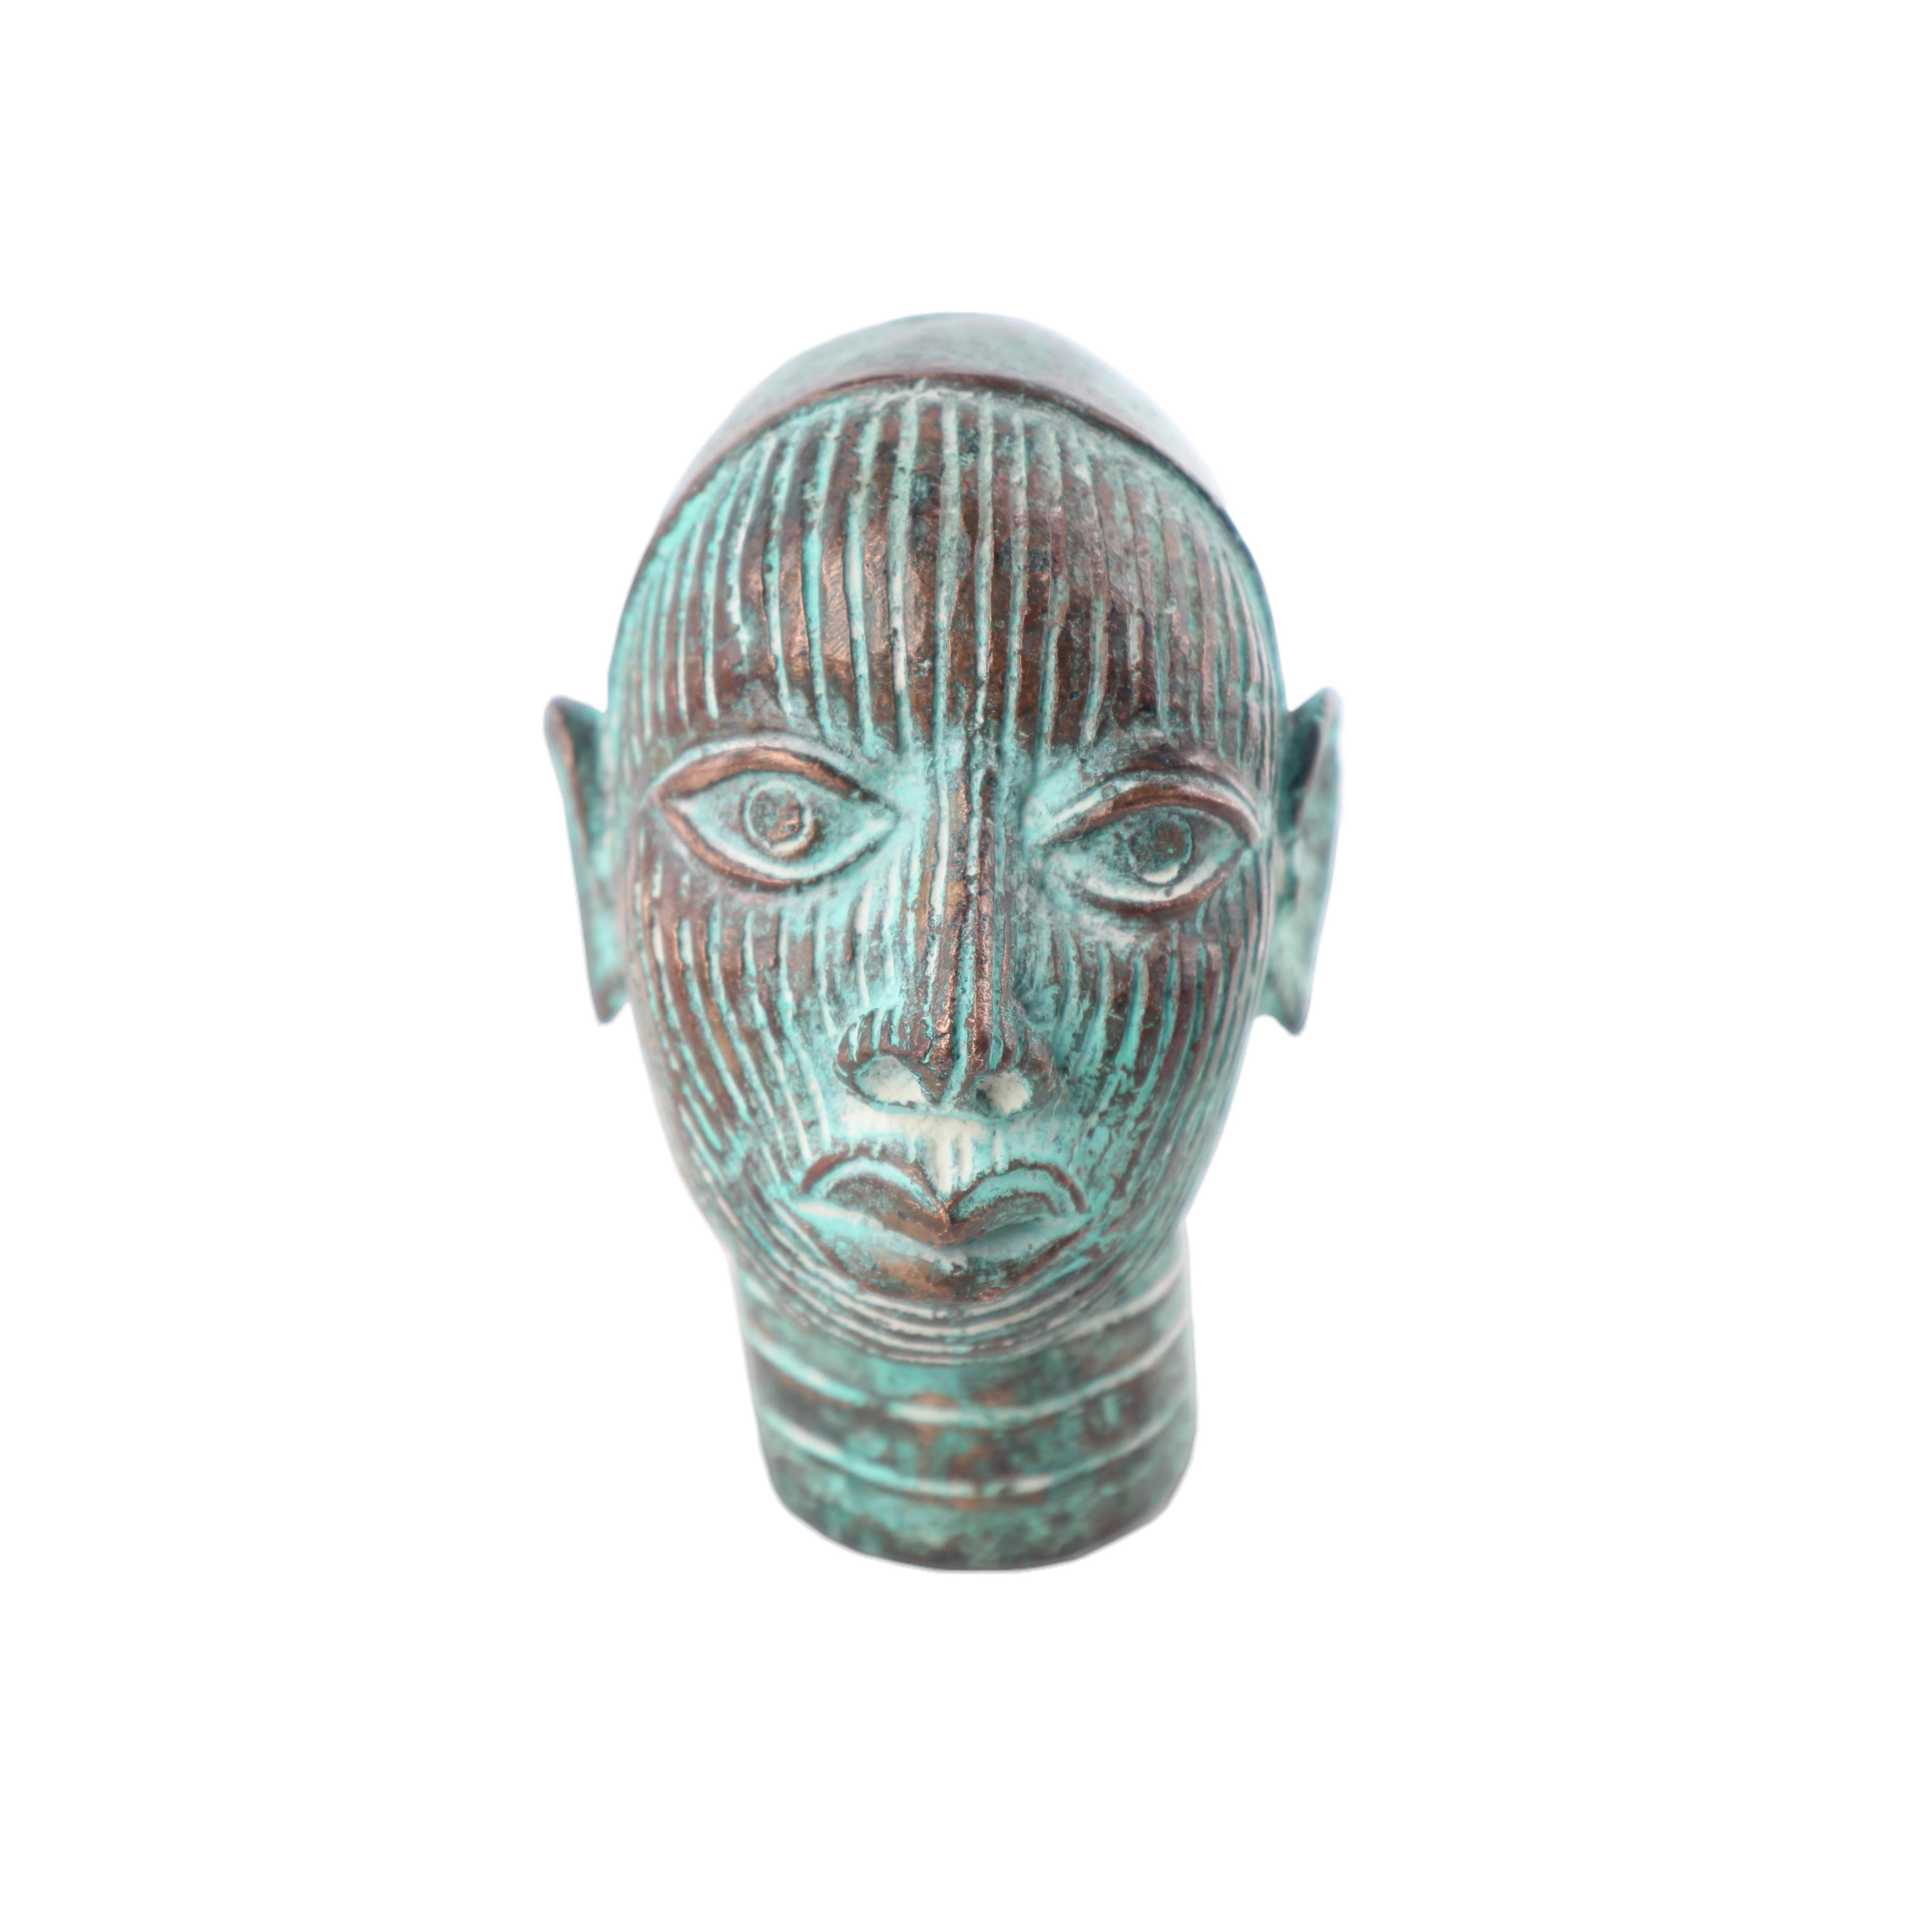 Yoruba Tribe Heads ~6.7" Tall - Heads